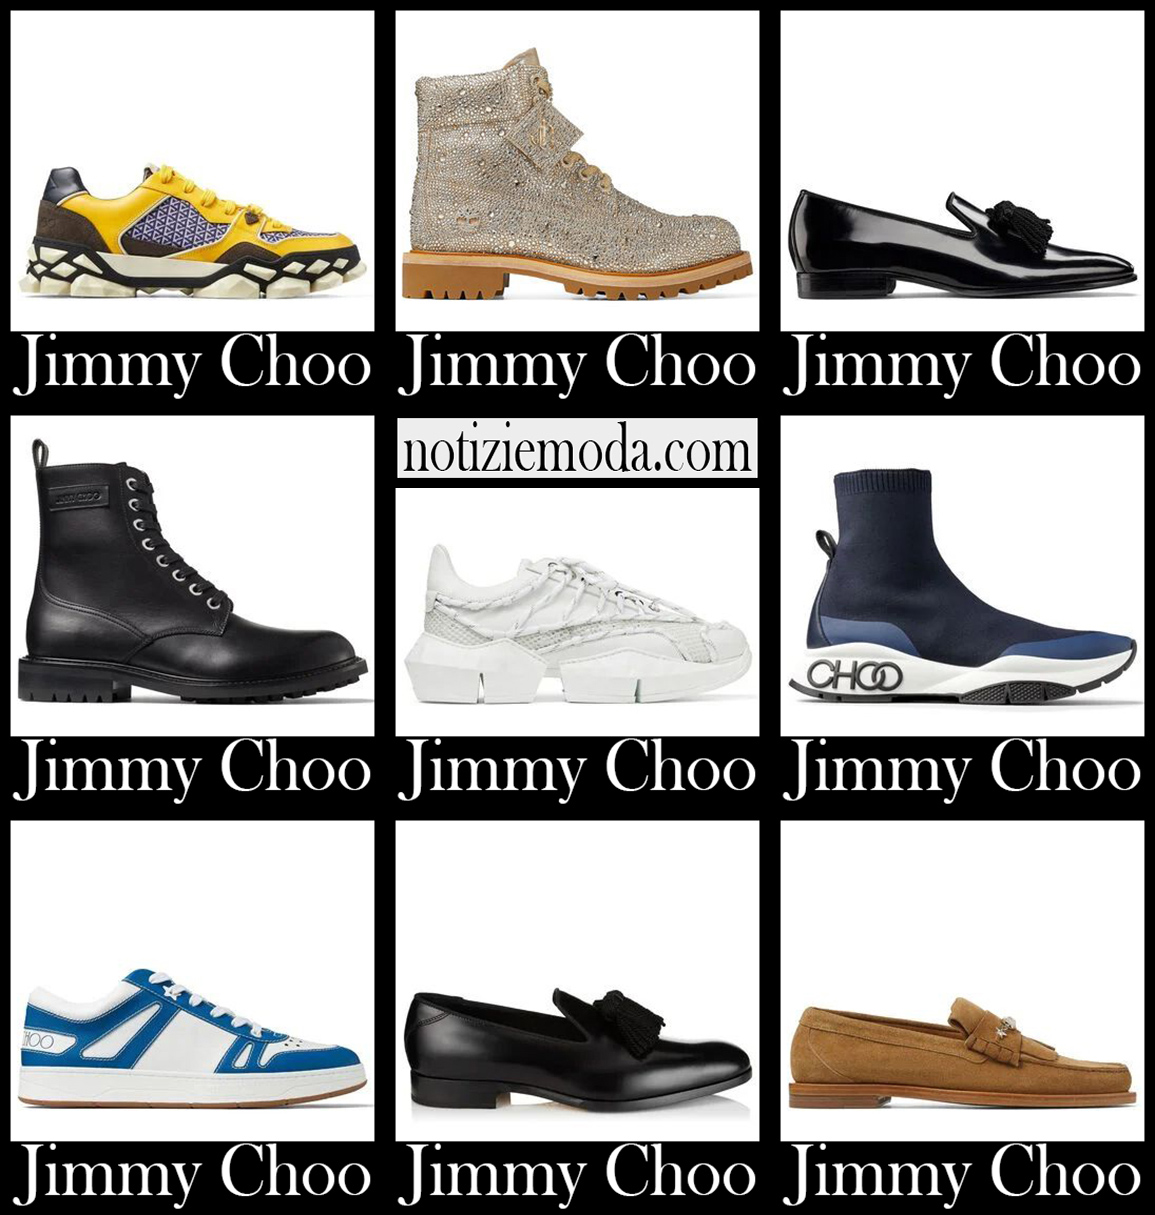 Nuovi arrivi scarpe Jimmy Choo 2021 calzature uomo